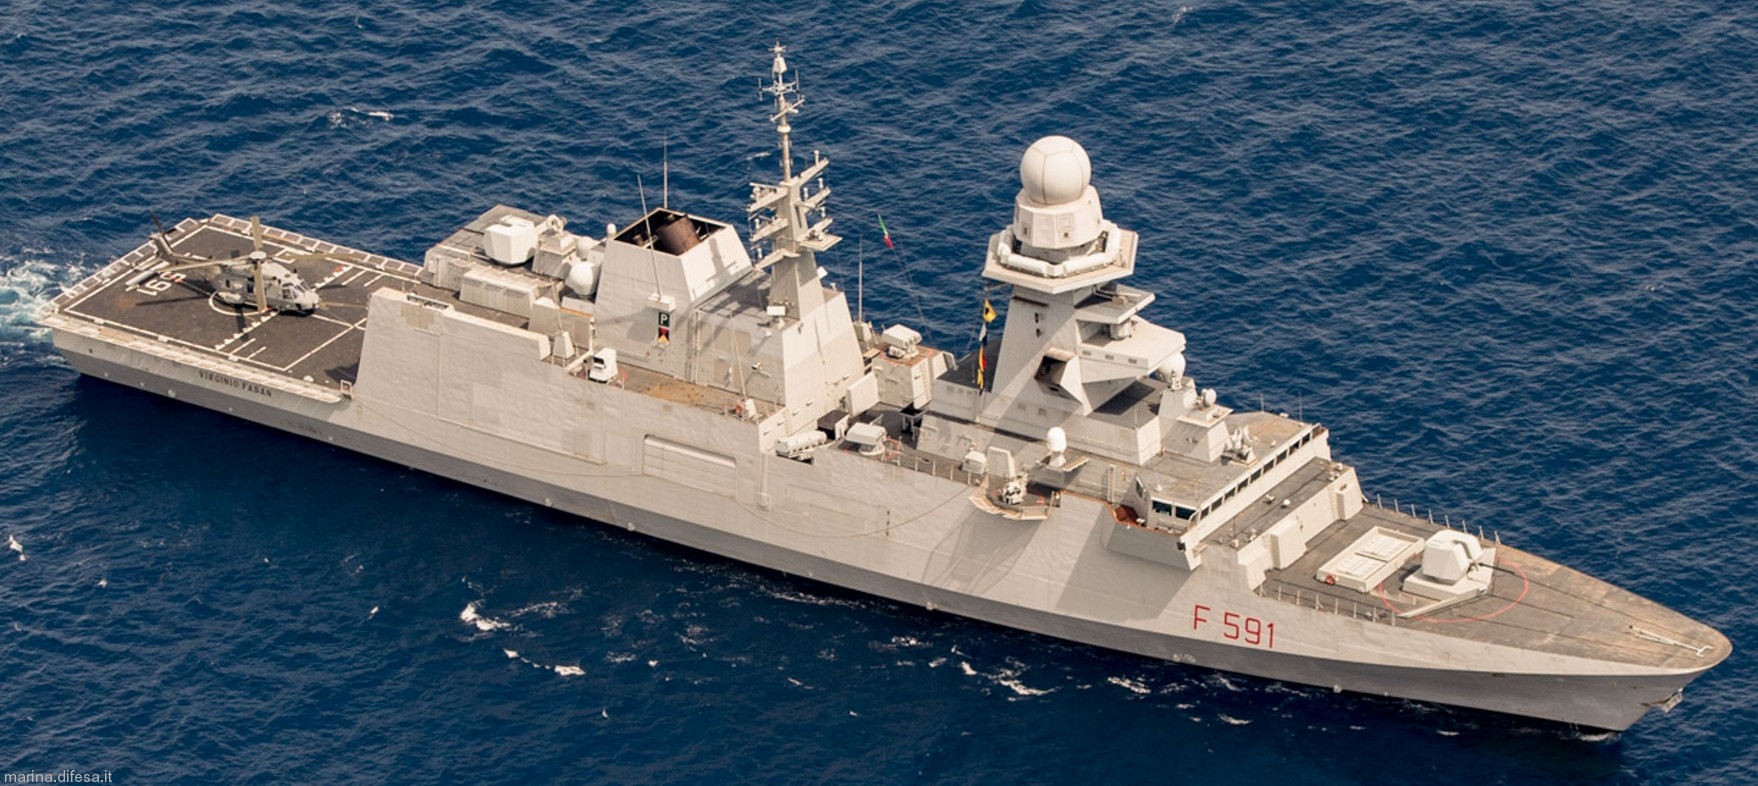 f-591 virginio fasan its nave bergamini fremm class guided missile frigate italian navy marina militare 51